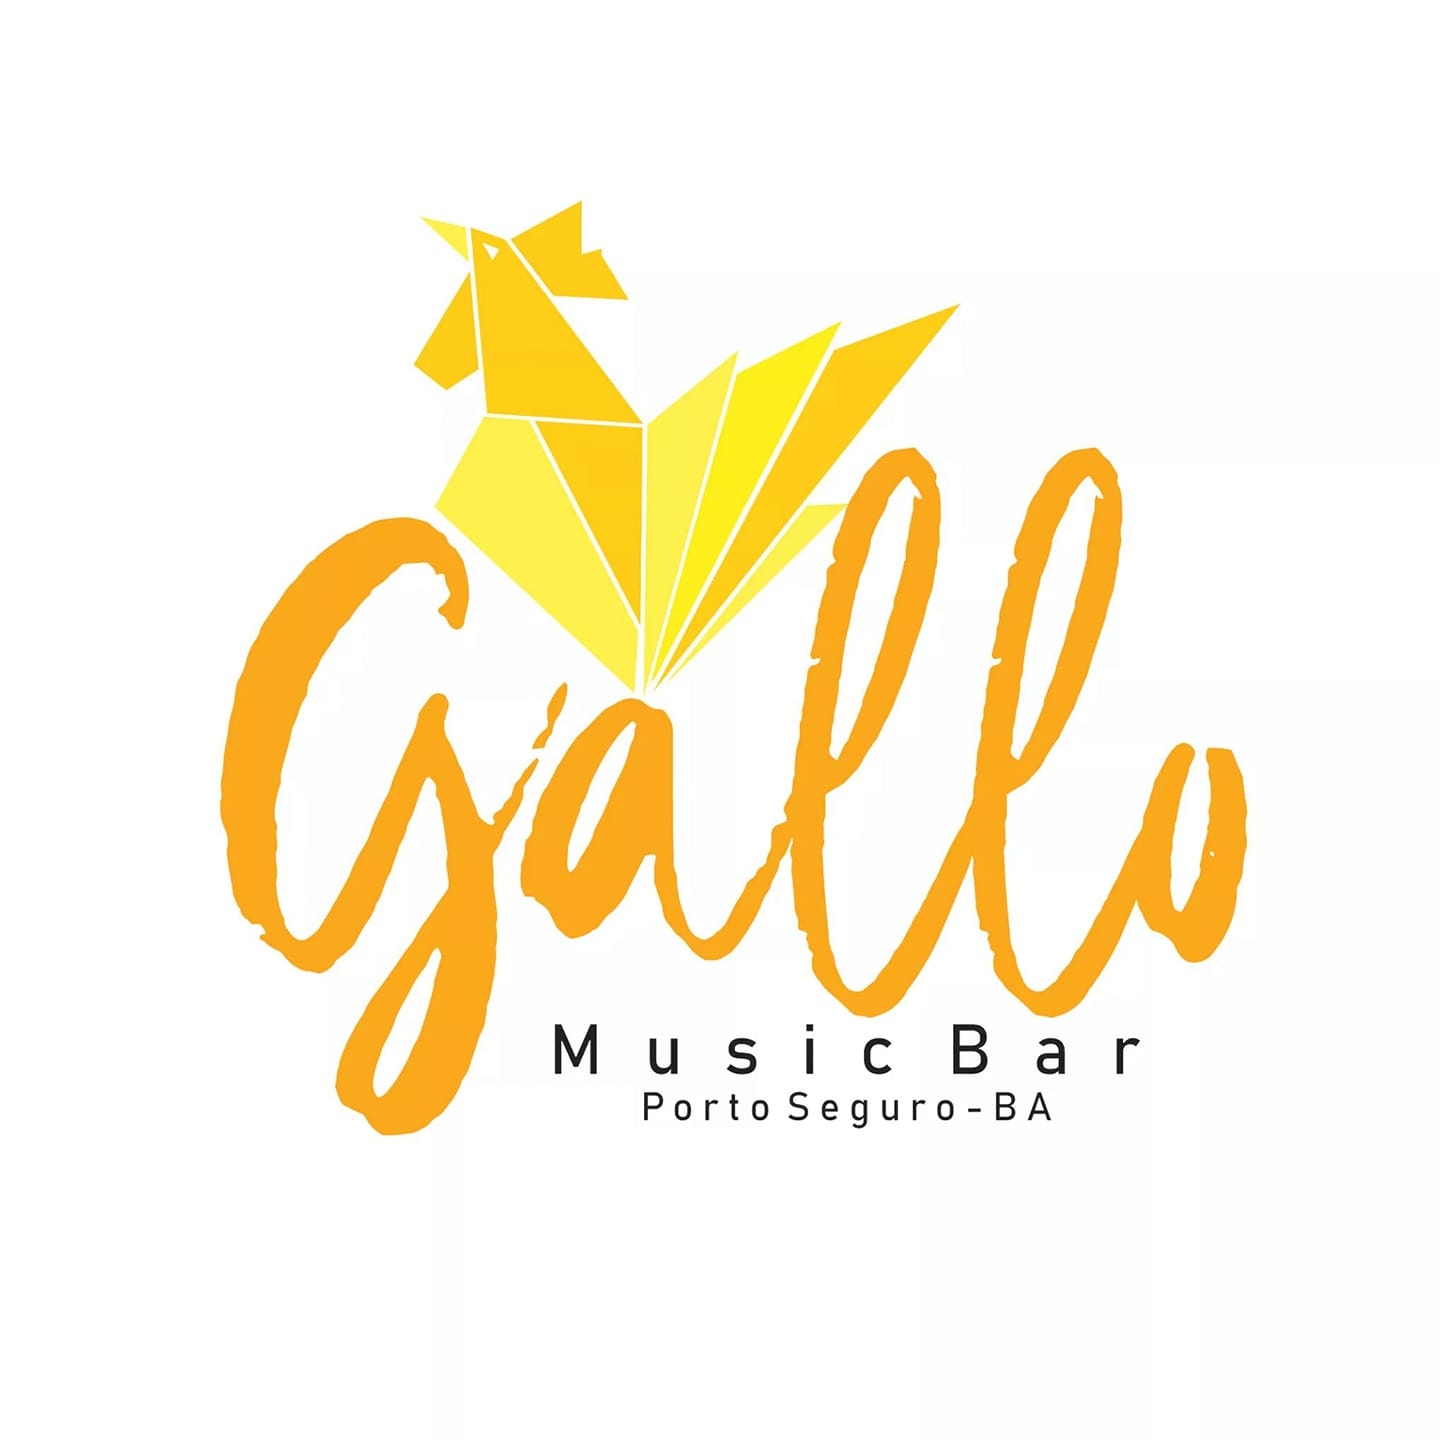 Cartaz  - Gallo Music Bar - Rua 2 de julho, 20B - Casa da Lenha, Sexta-feira 28 de Junho de 2019